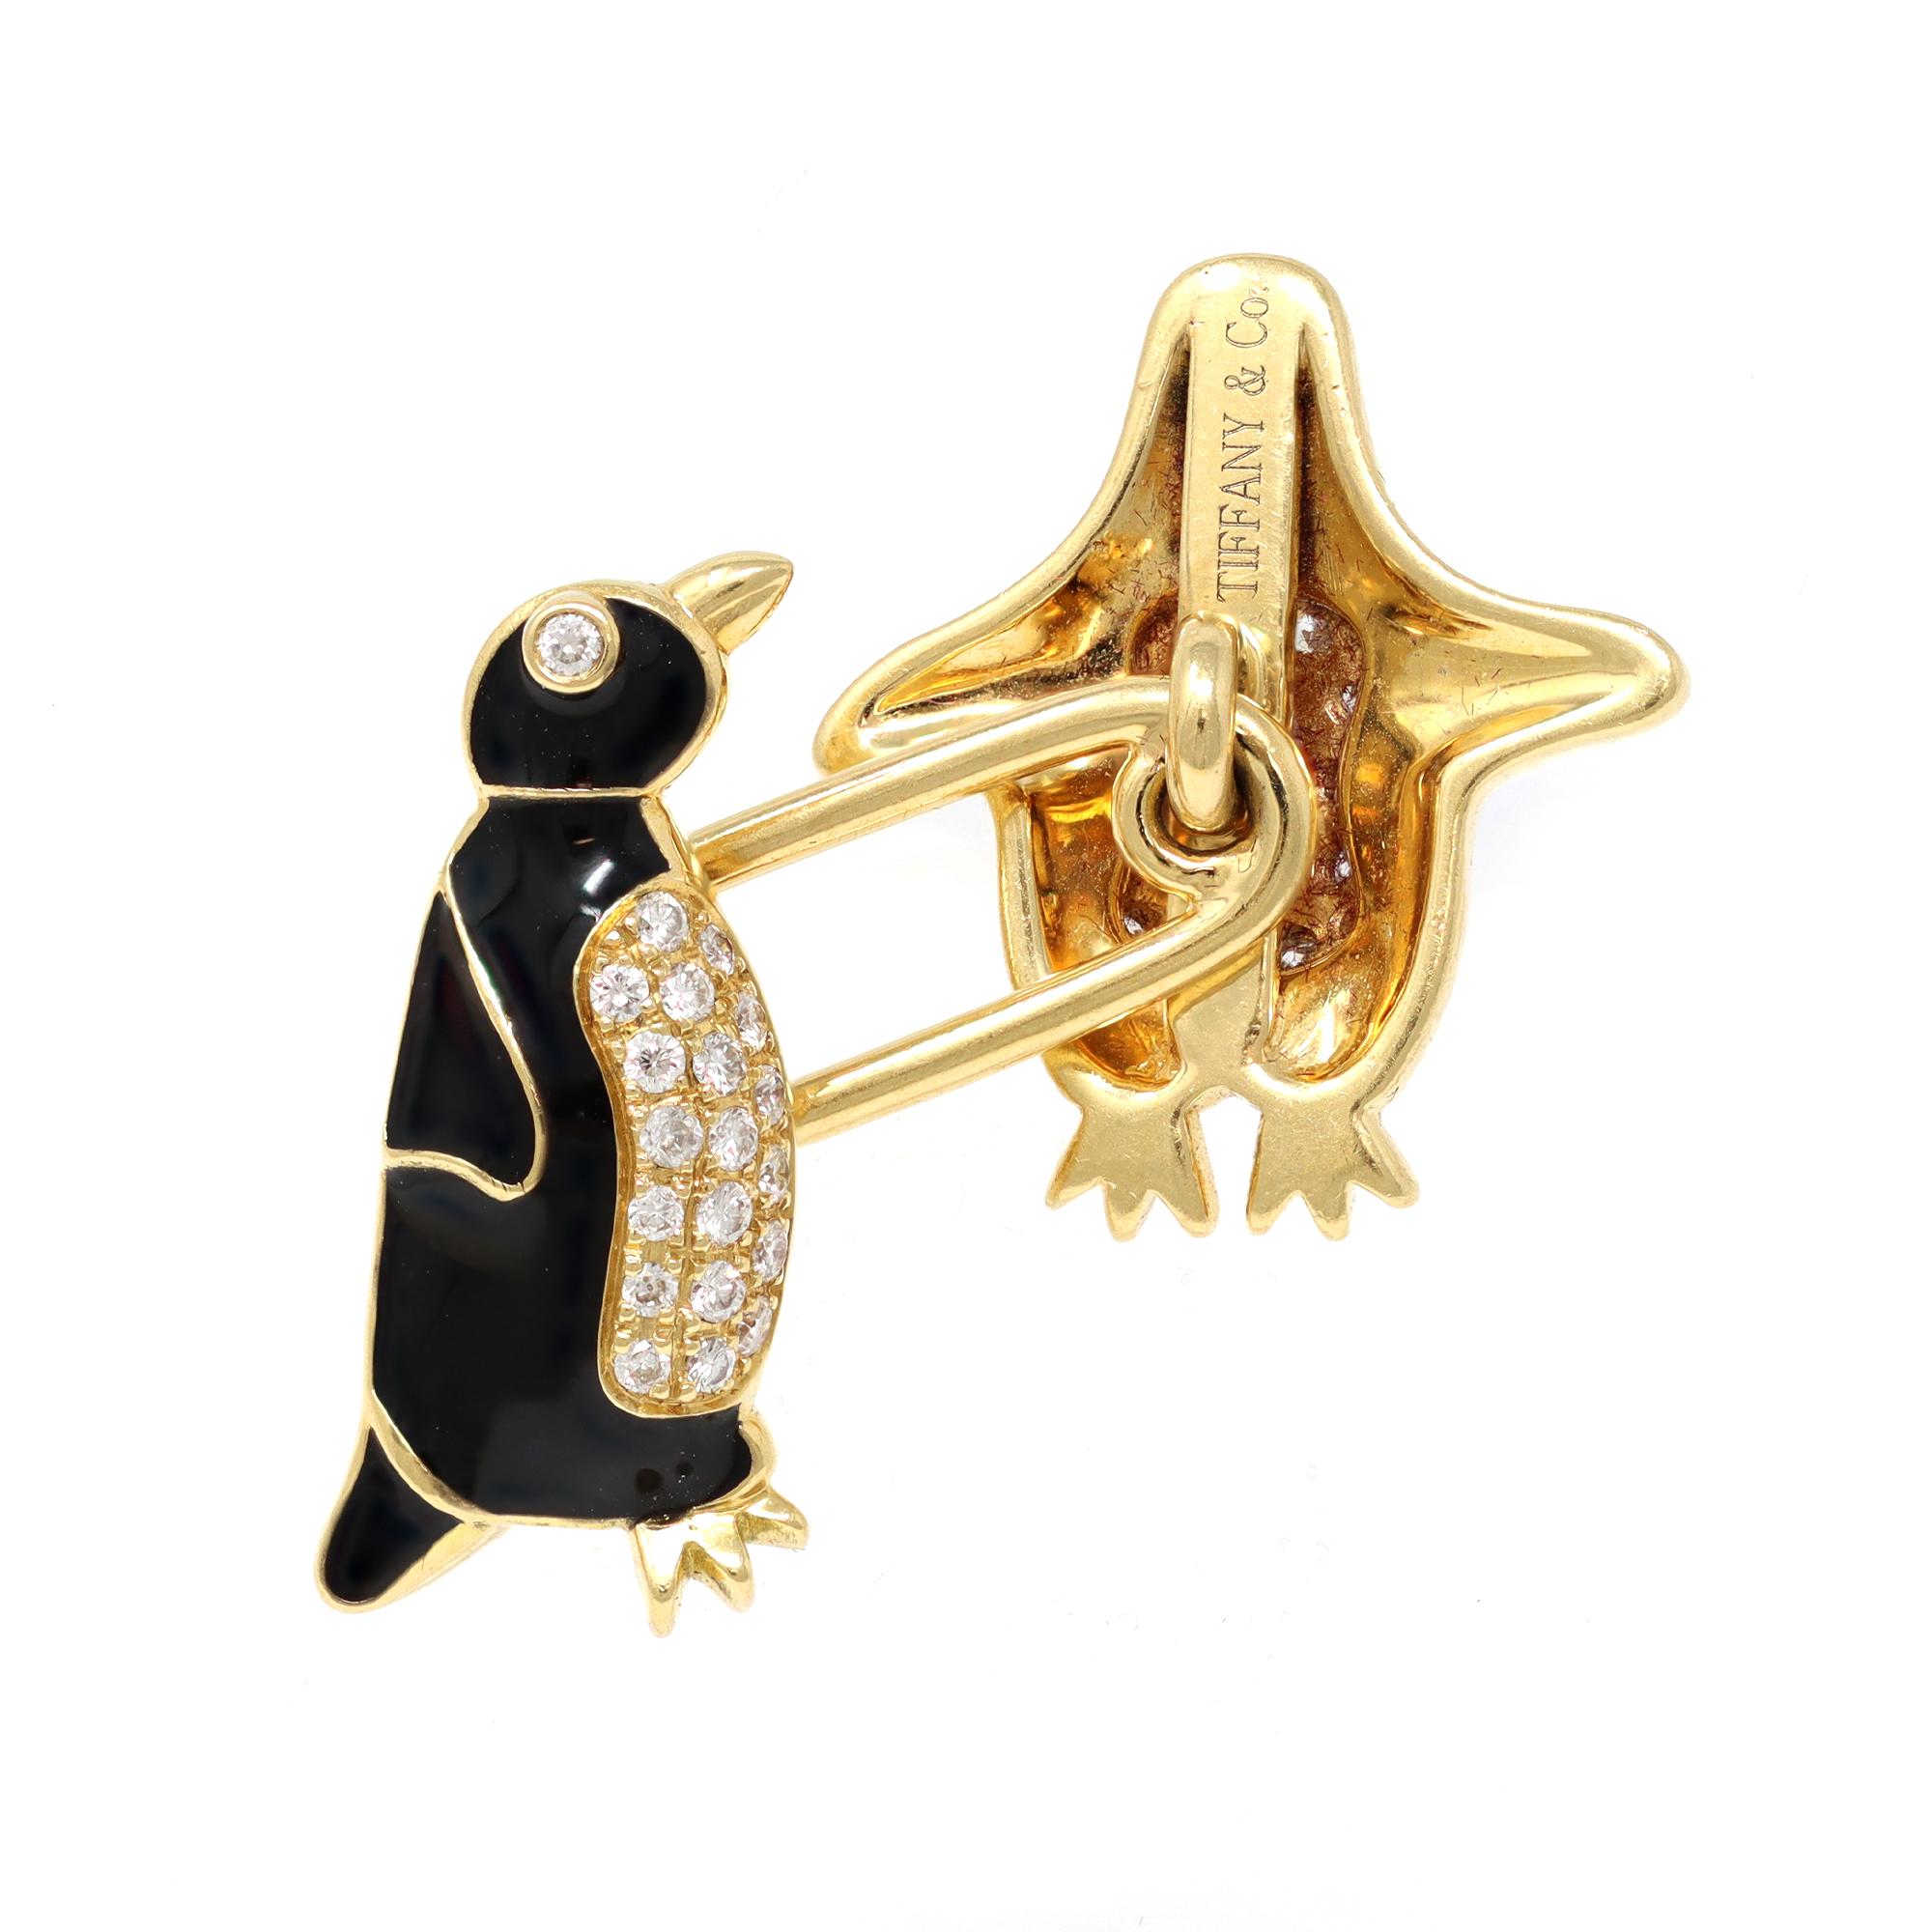 Round Cut Tiffany & Co. Diamond and Enamel Penguin Cufflink and Studs Set in 18 Karat Gold